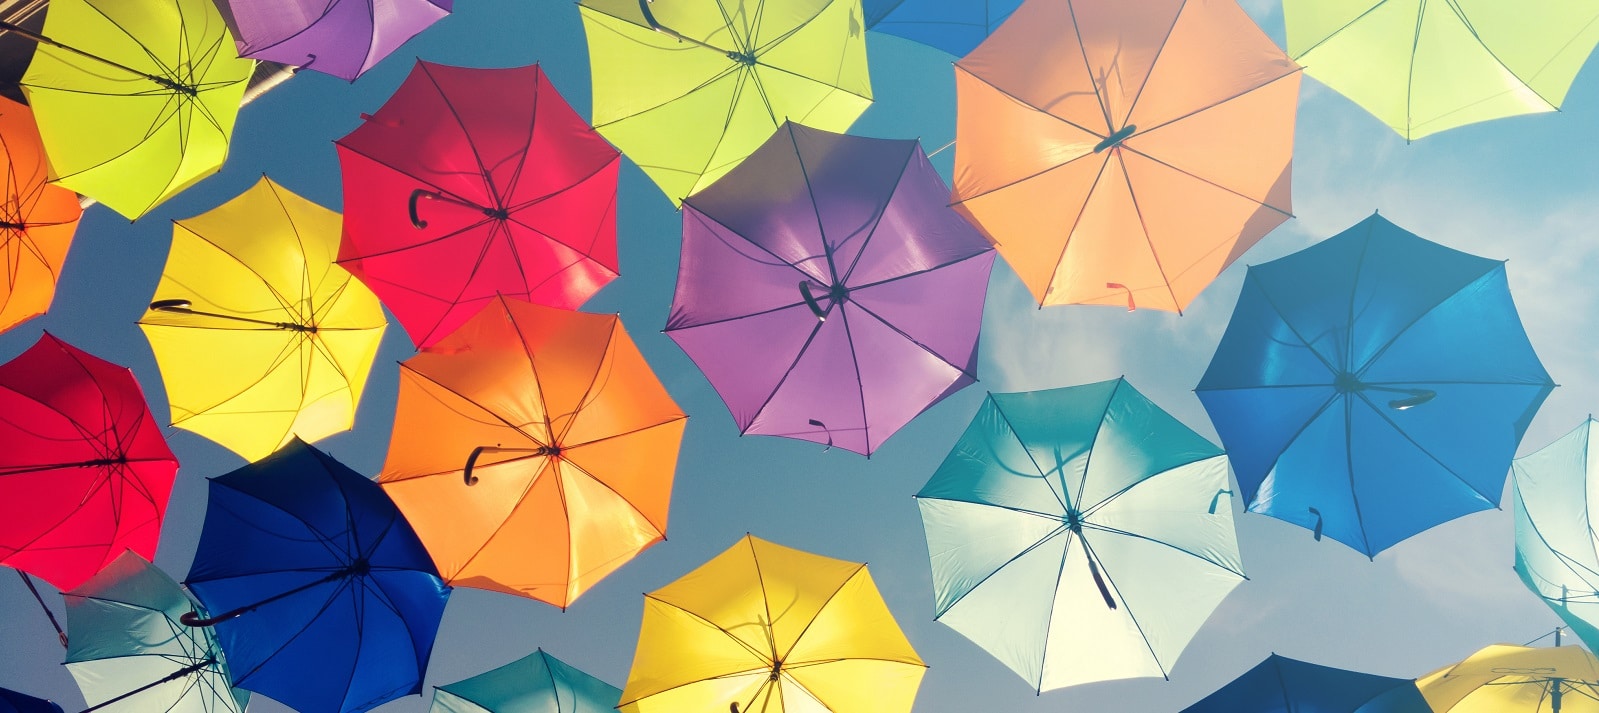 Image of umbrellas on PSA Financial's website